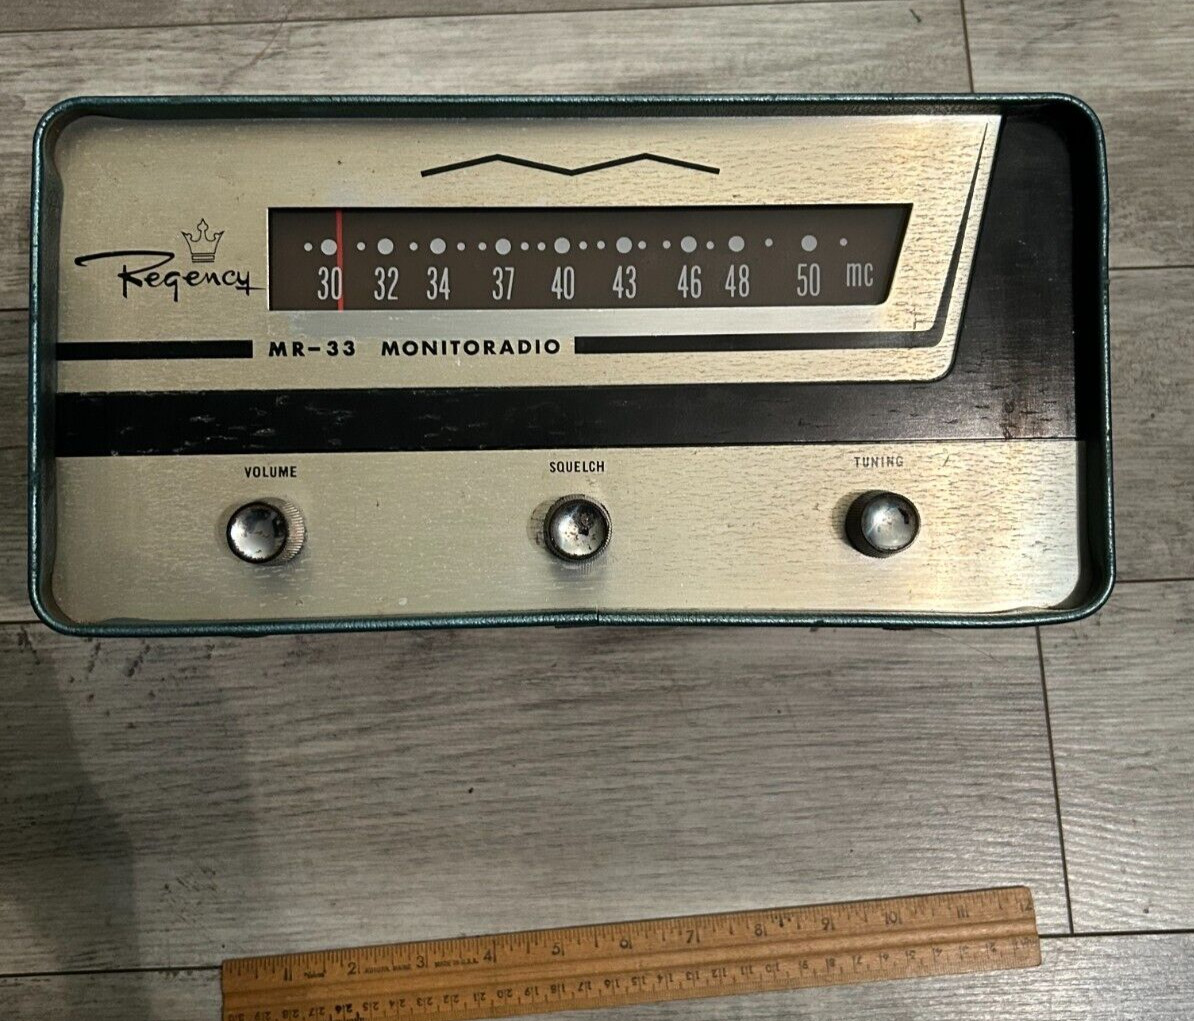 Vintage Regency MR-33 Monitoradio